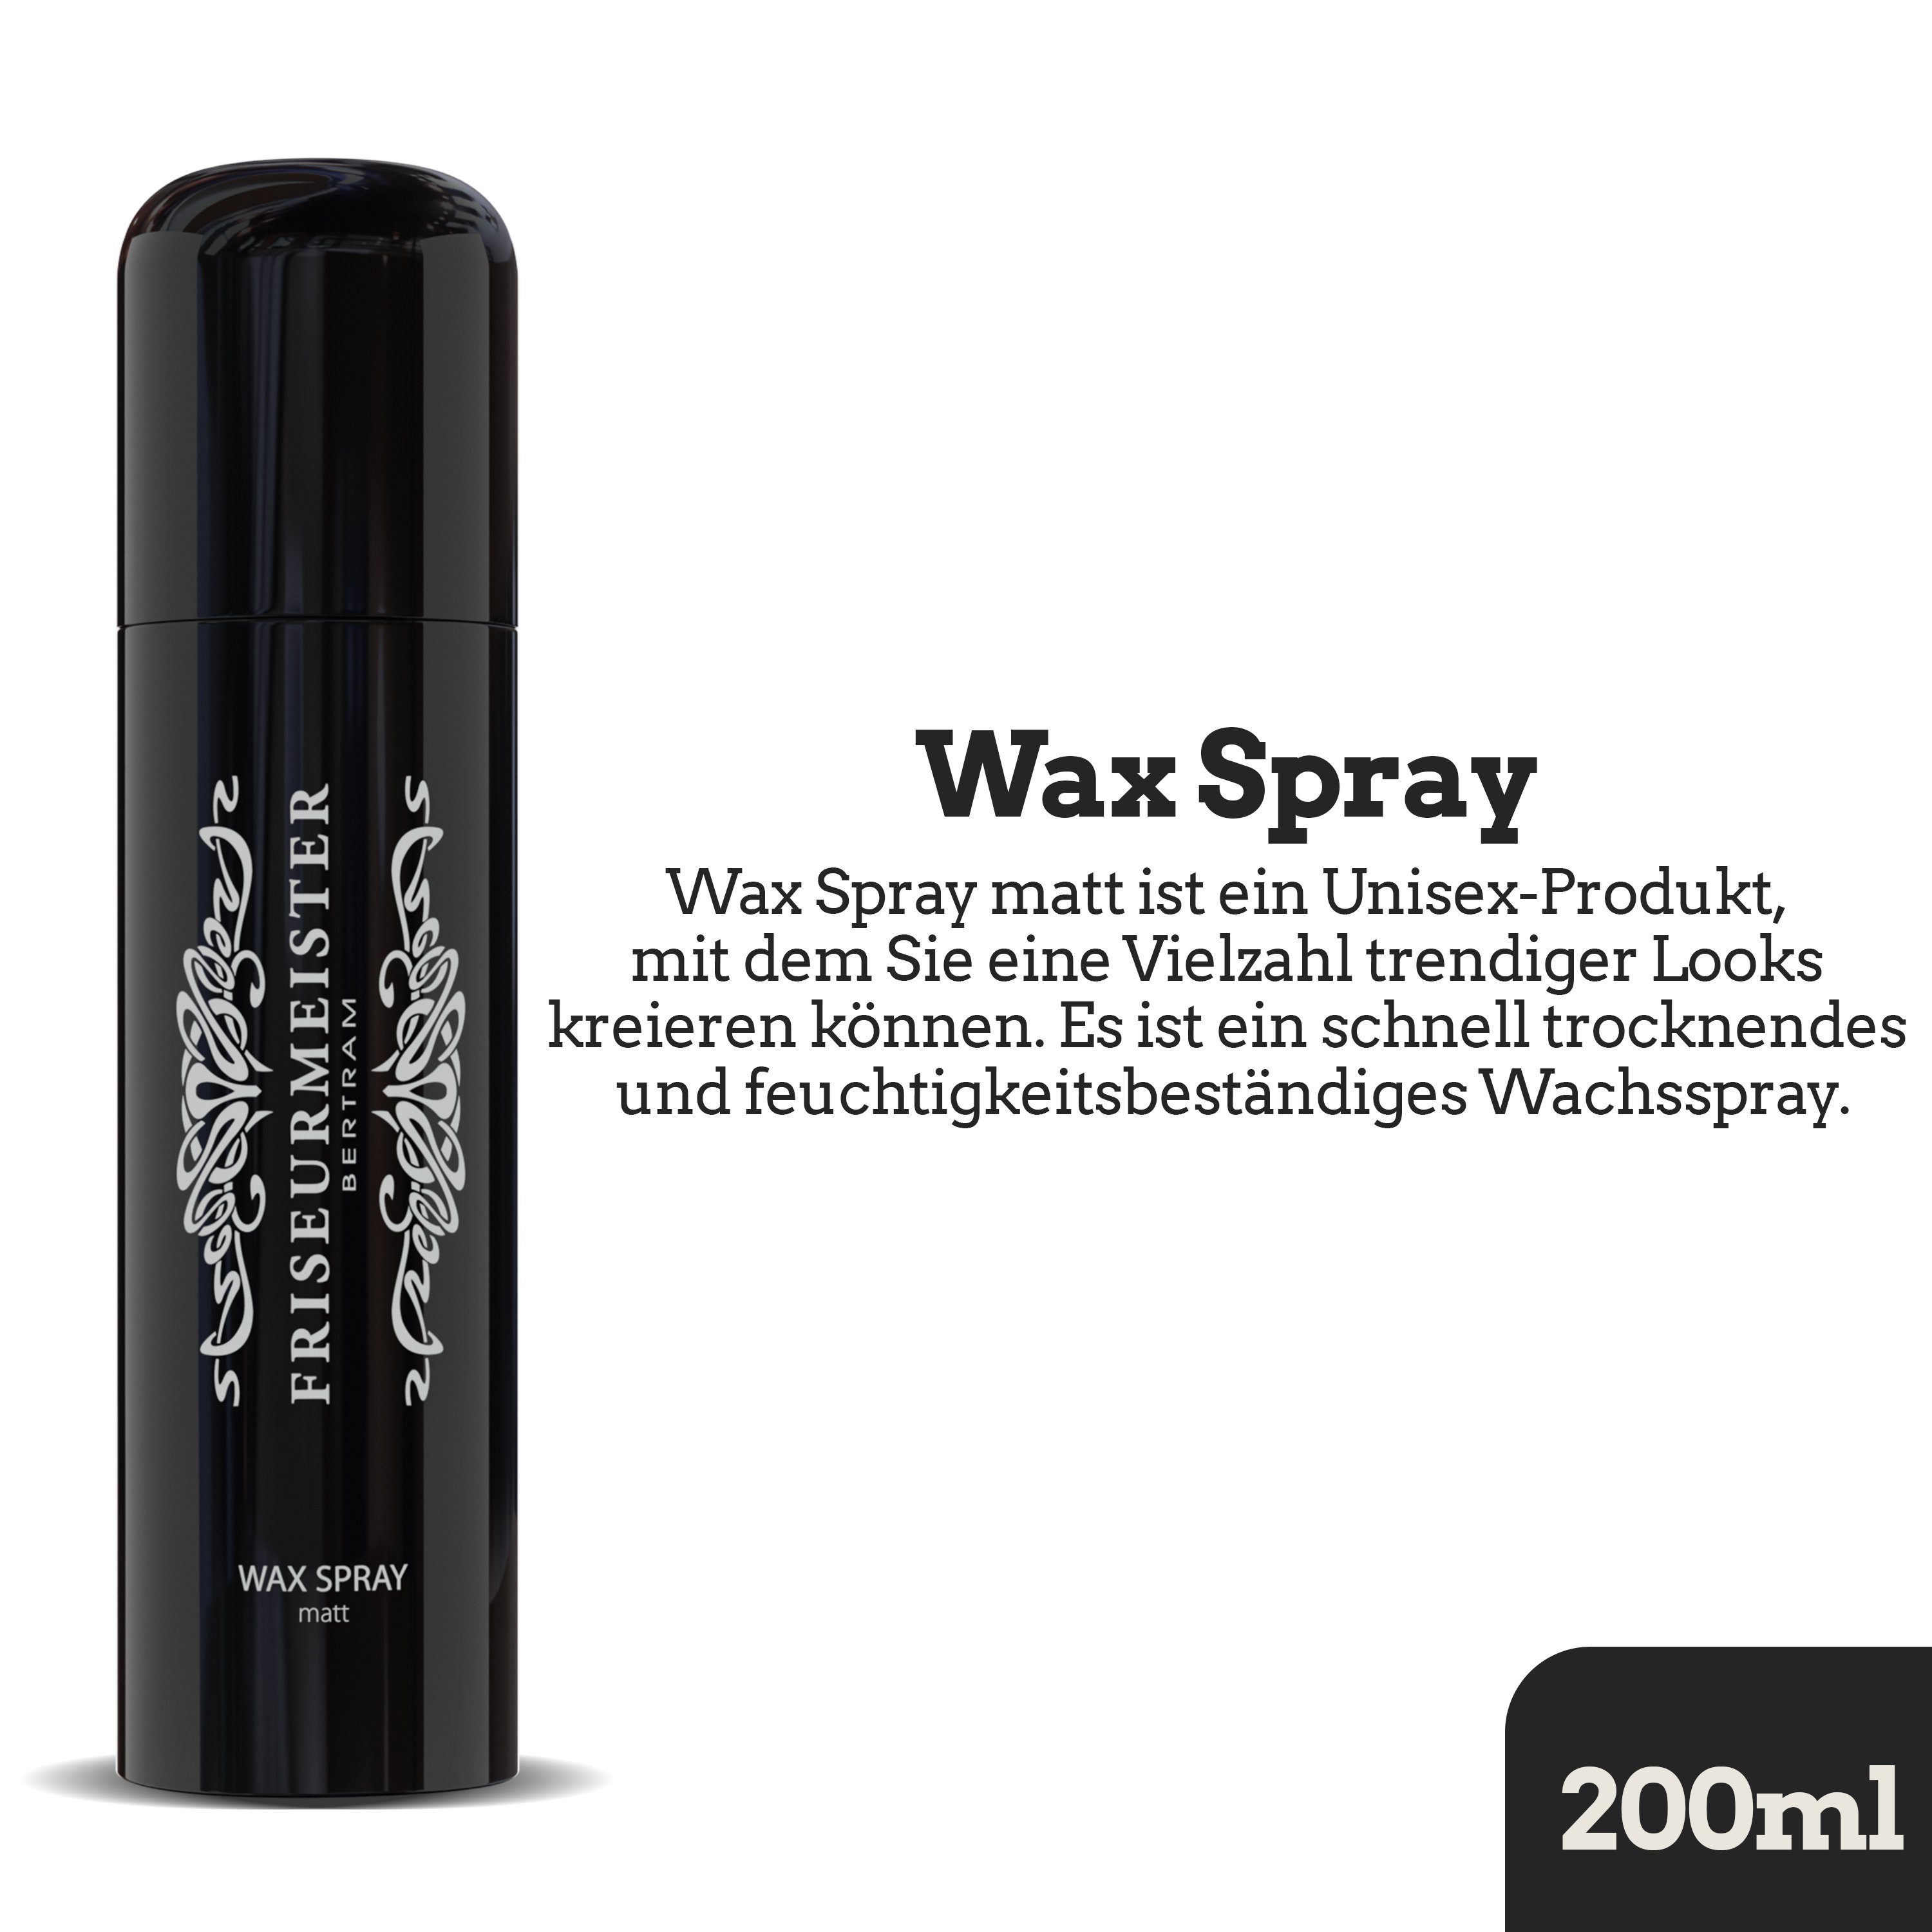 Friseurmeister Haarpflege-Spray Wax trocknend soft - matt Looks Styling 200ml Haarspray Spray trendige schnell Haar Wax